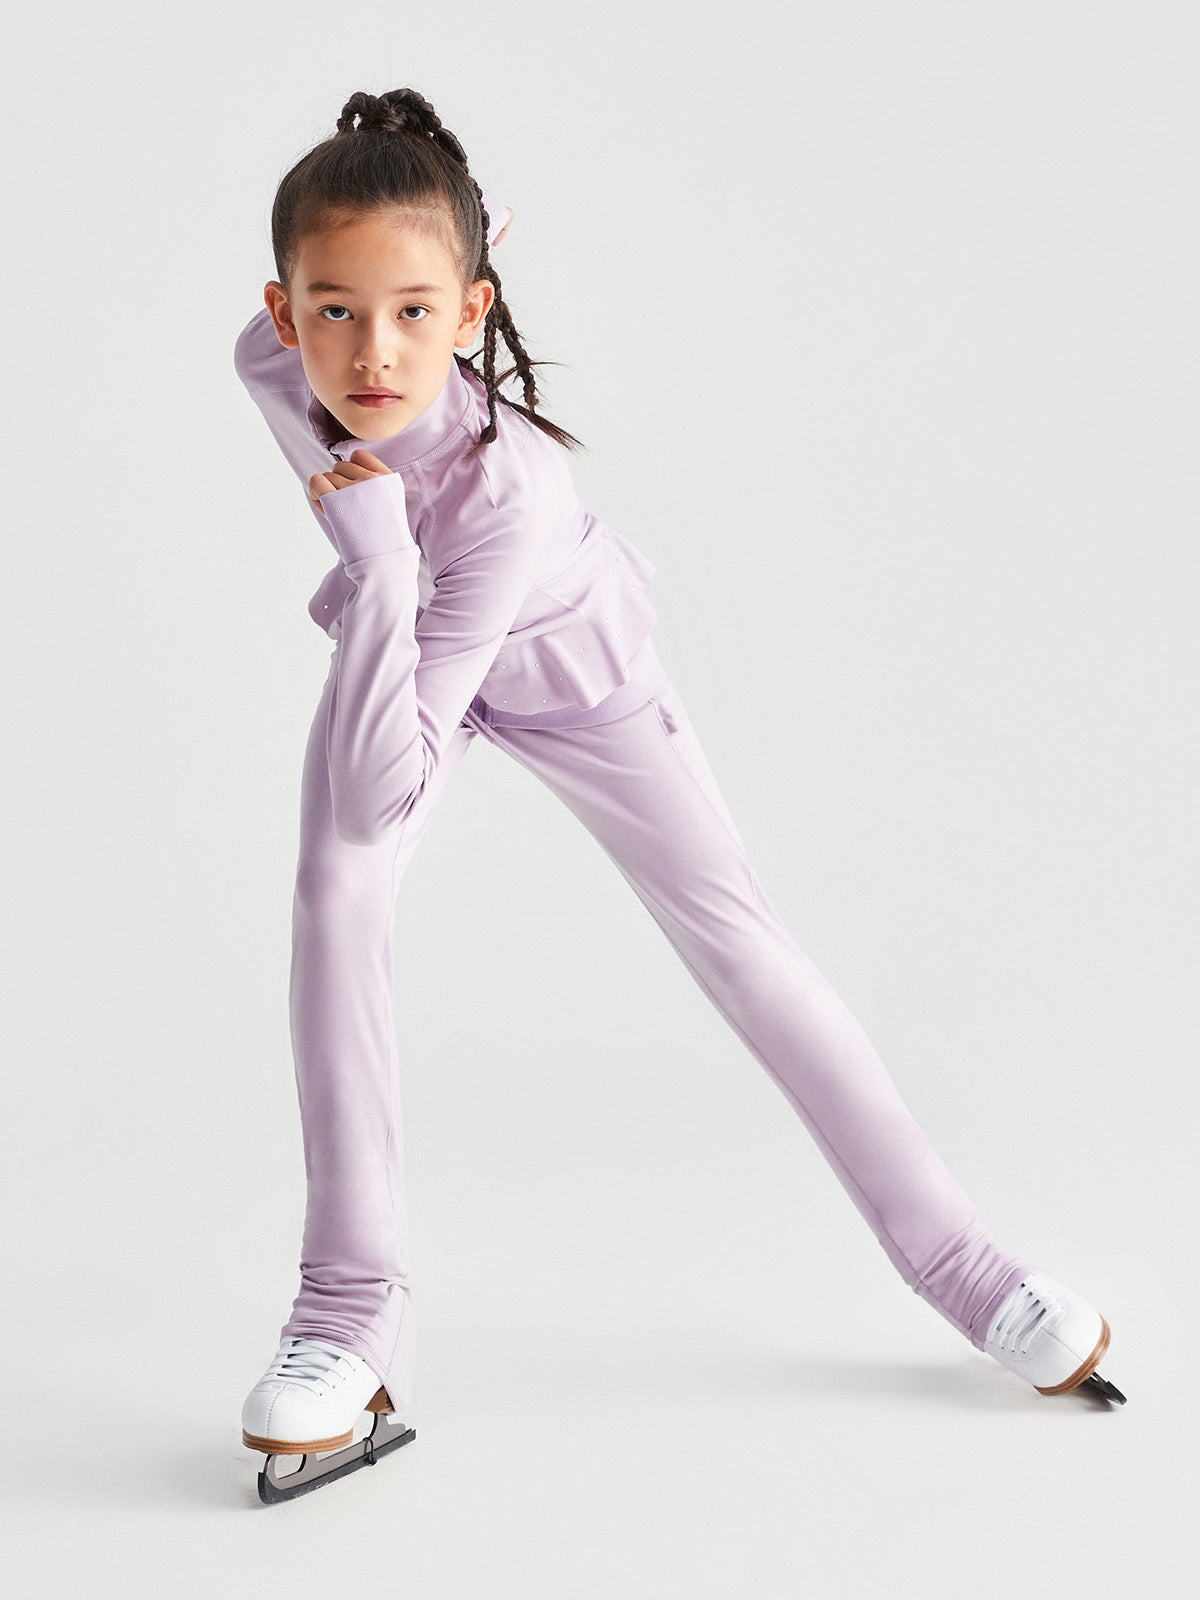 Figure Skating Leggings Jackets Sets Girls Children High Quality